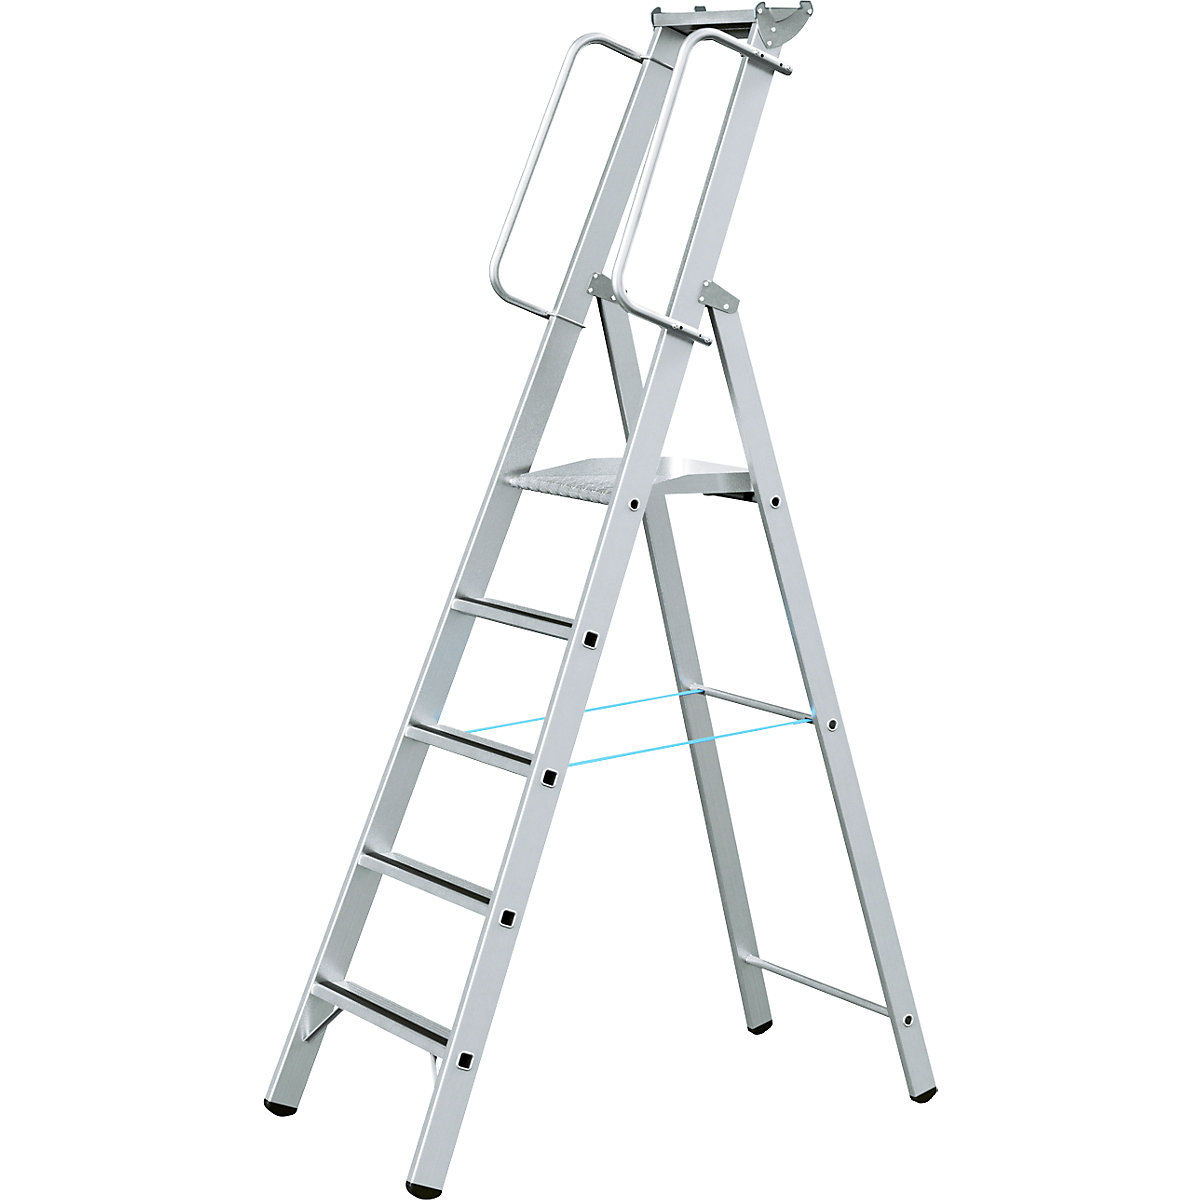 aluminium step ladders for sale